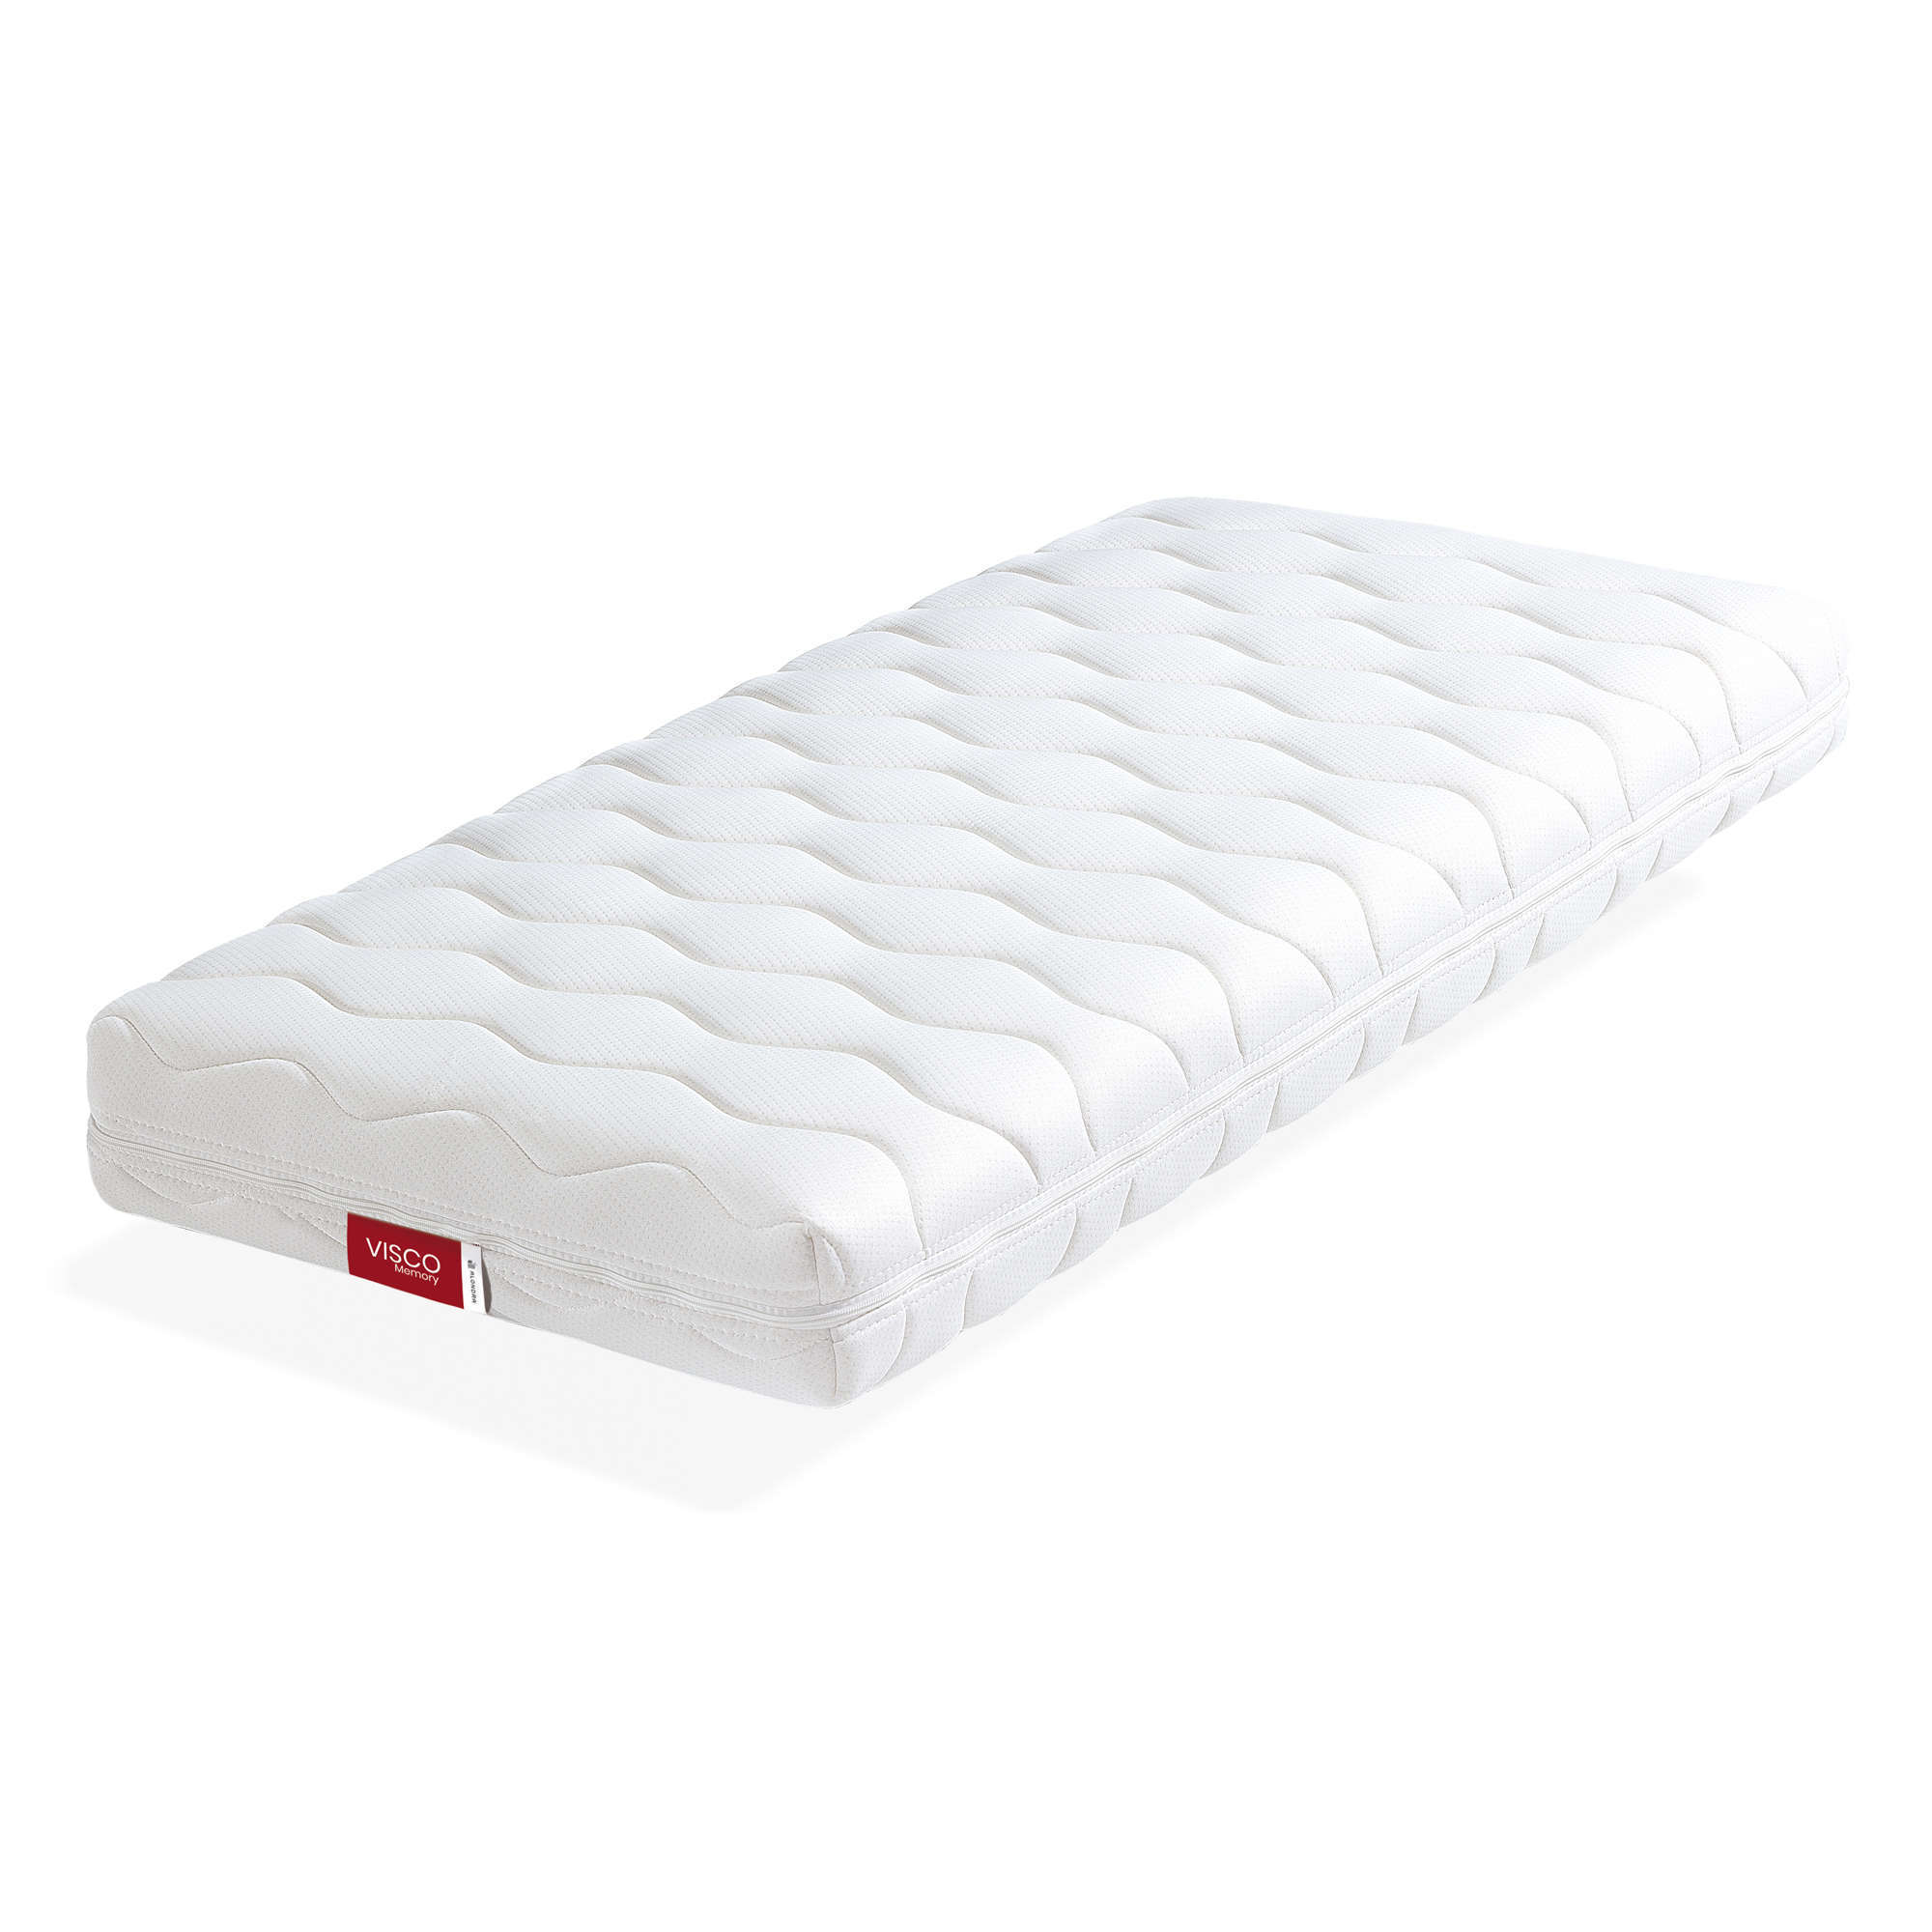 2 memory foam mattresses